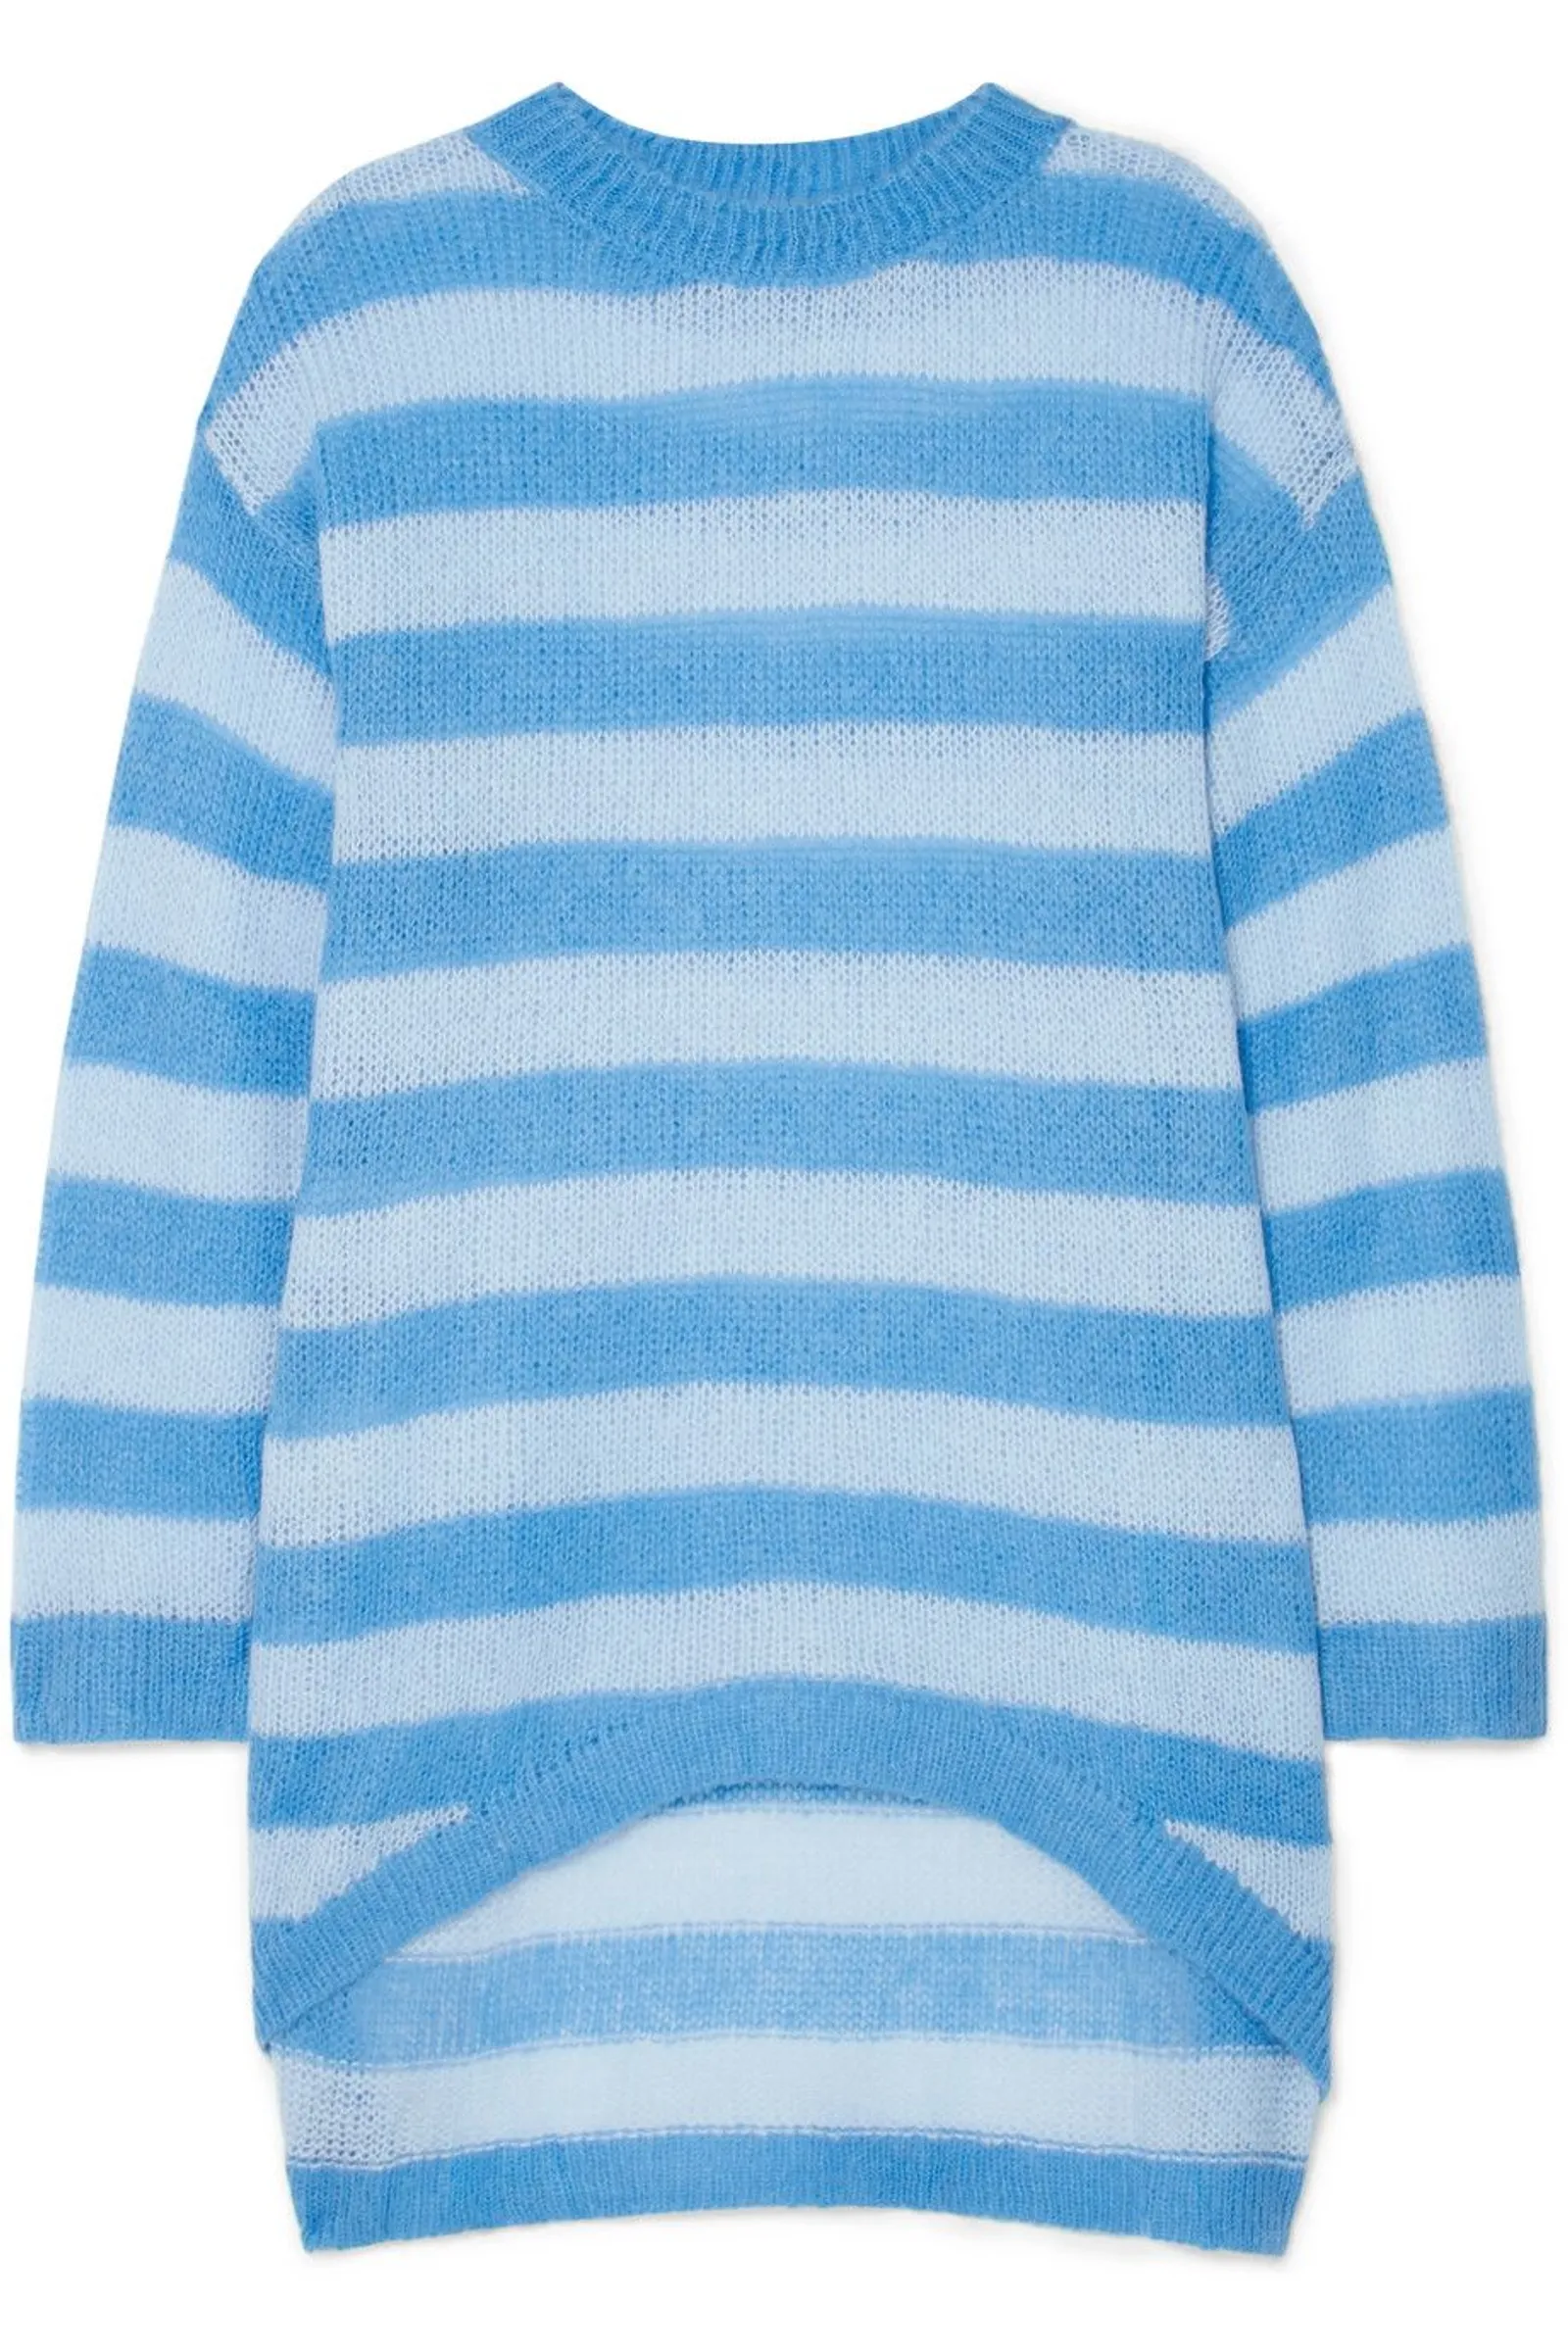 #PopbelaOOTD: Sweater Biru untuk Kesan yang Manis